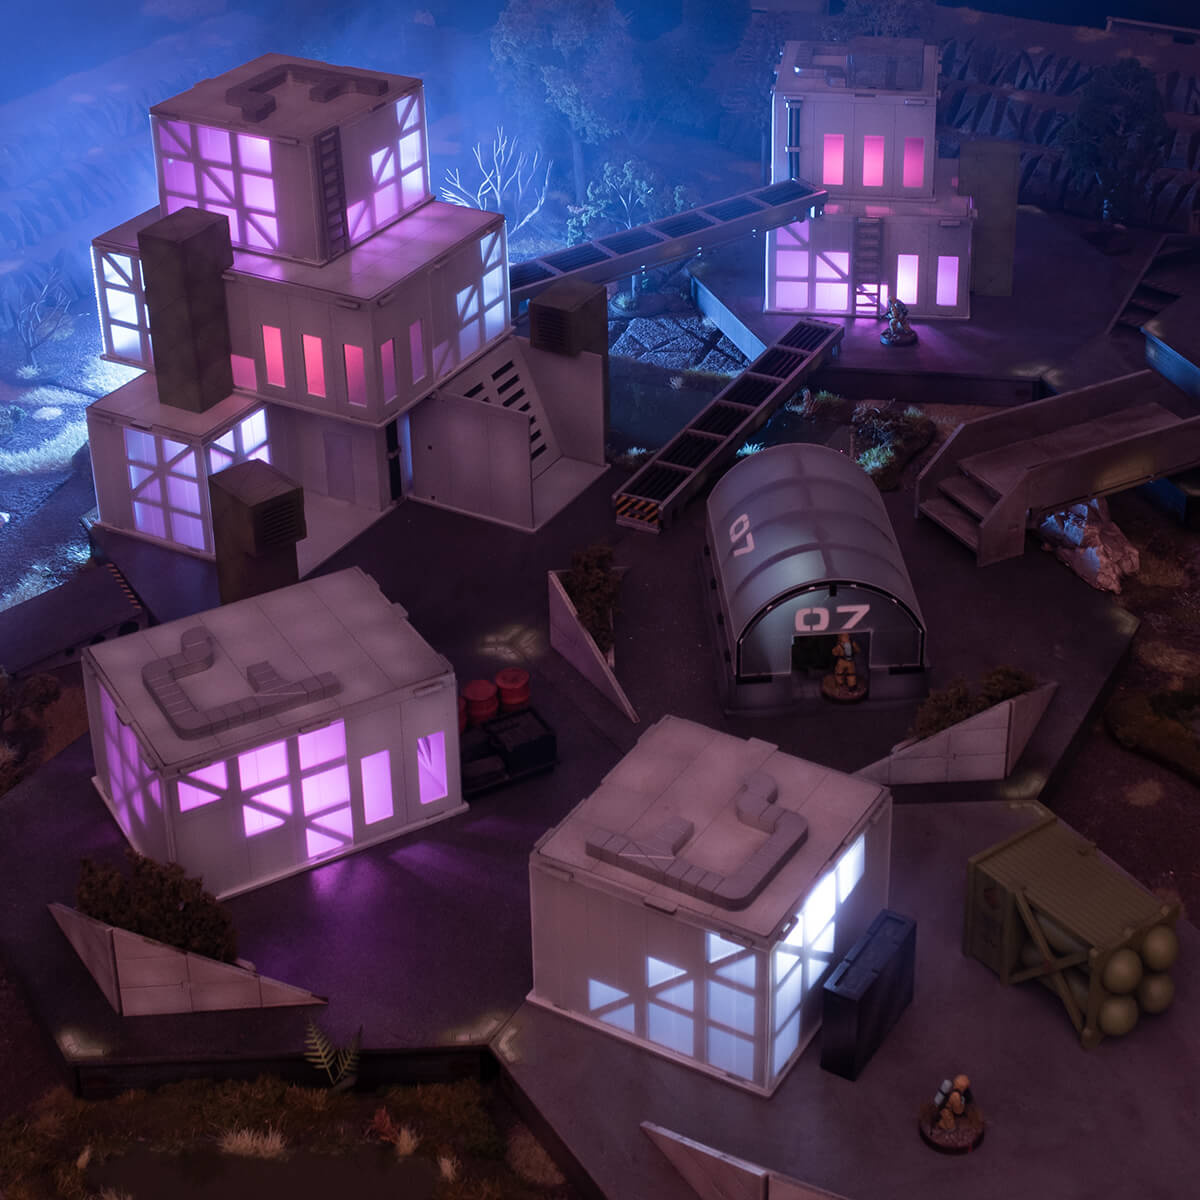 night themed 28mm sci-fi wargaming table terrain